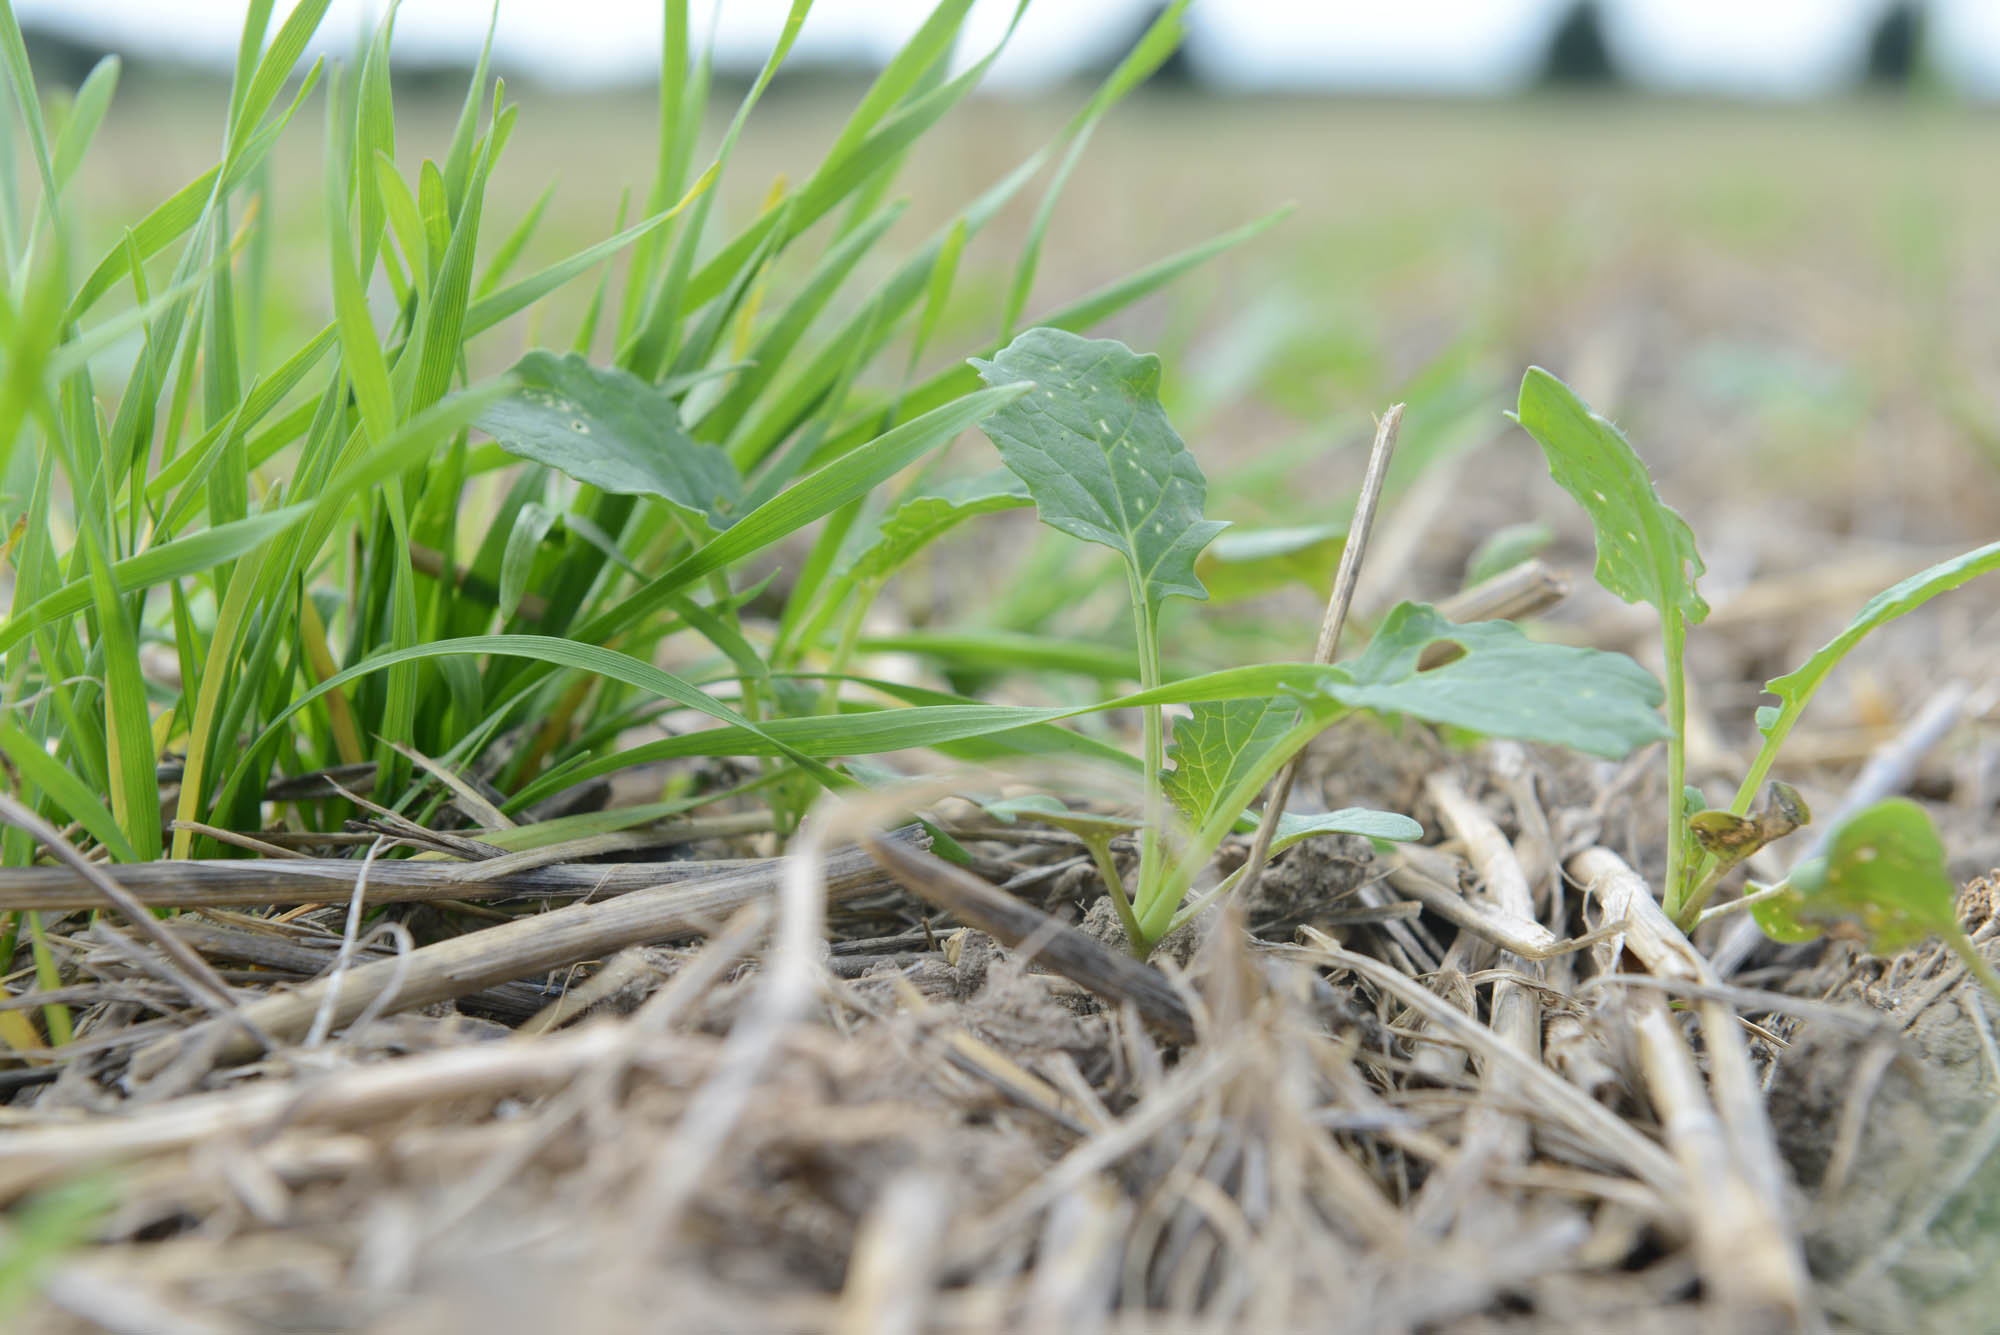 Vigorous growth of volunteer cereals will shade out light for establishing OSR seedlings.